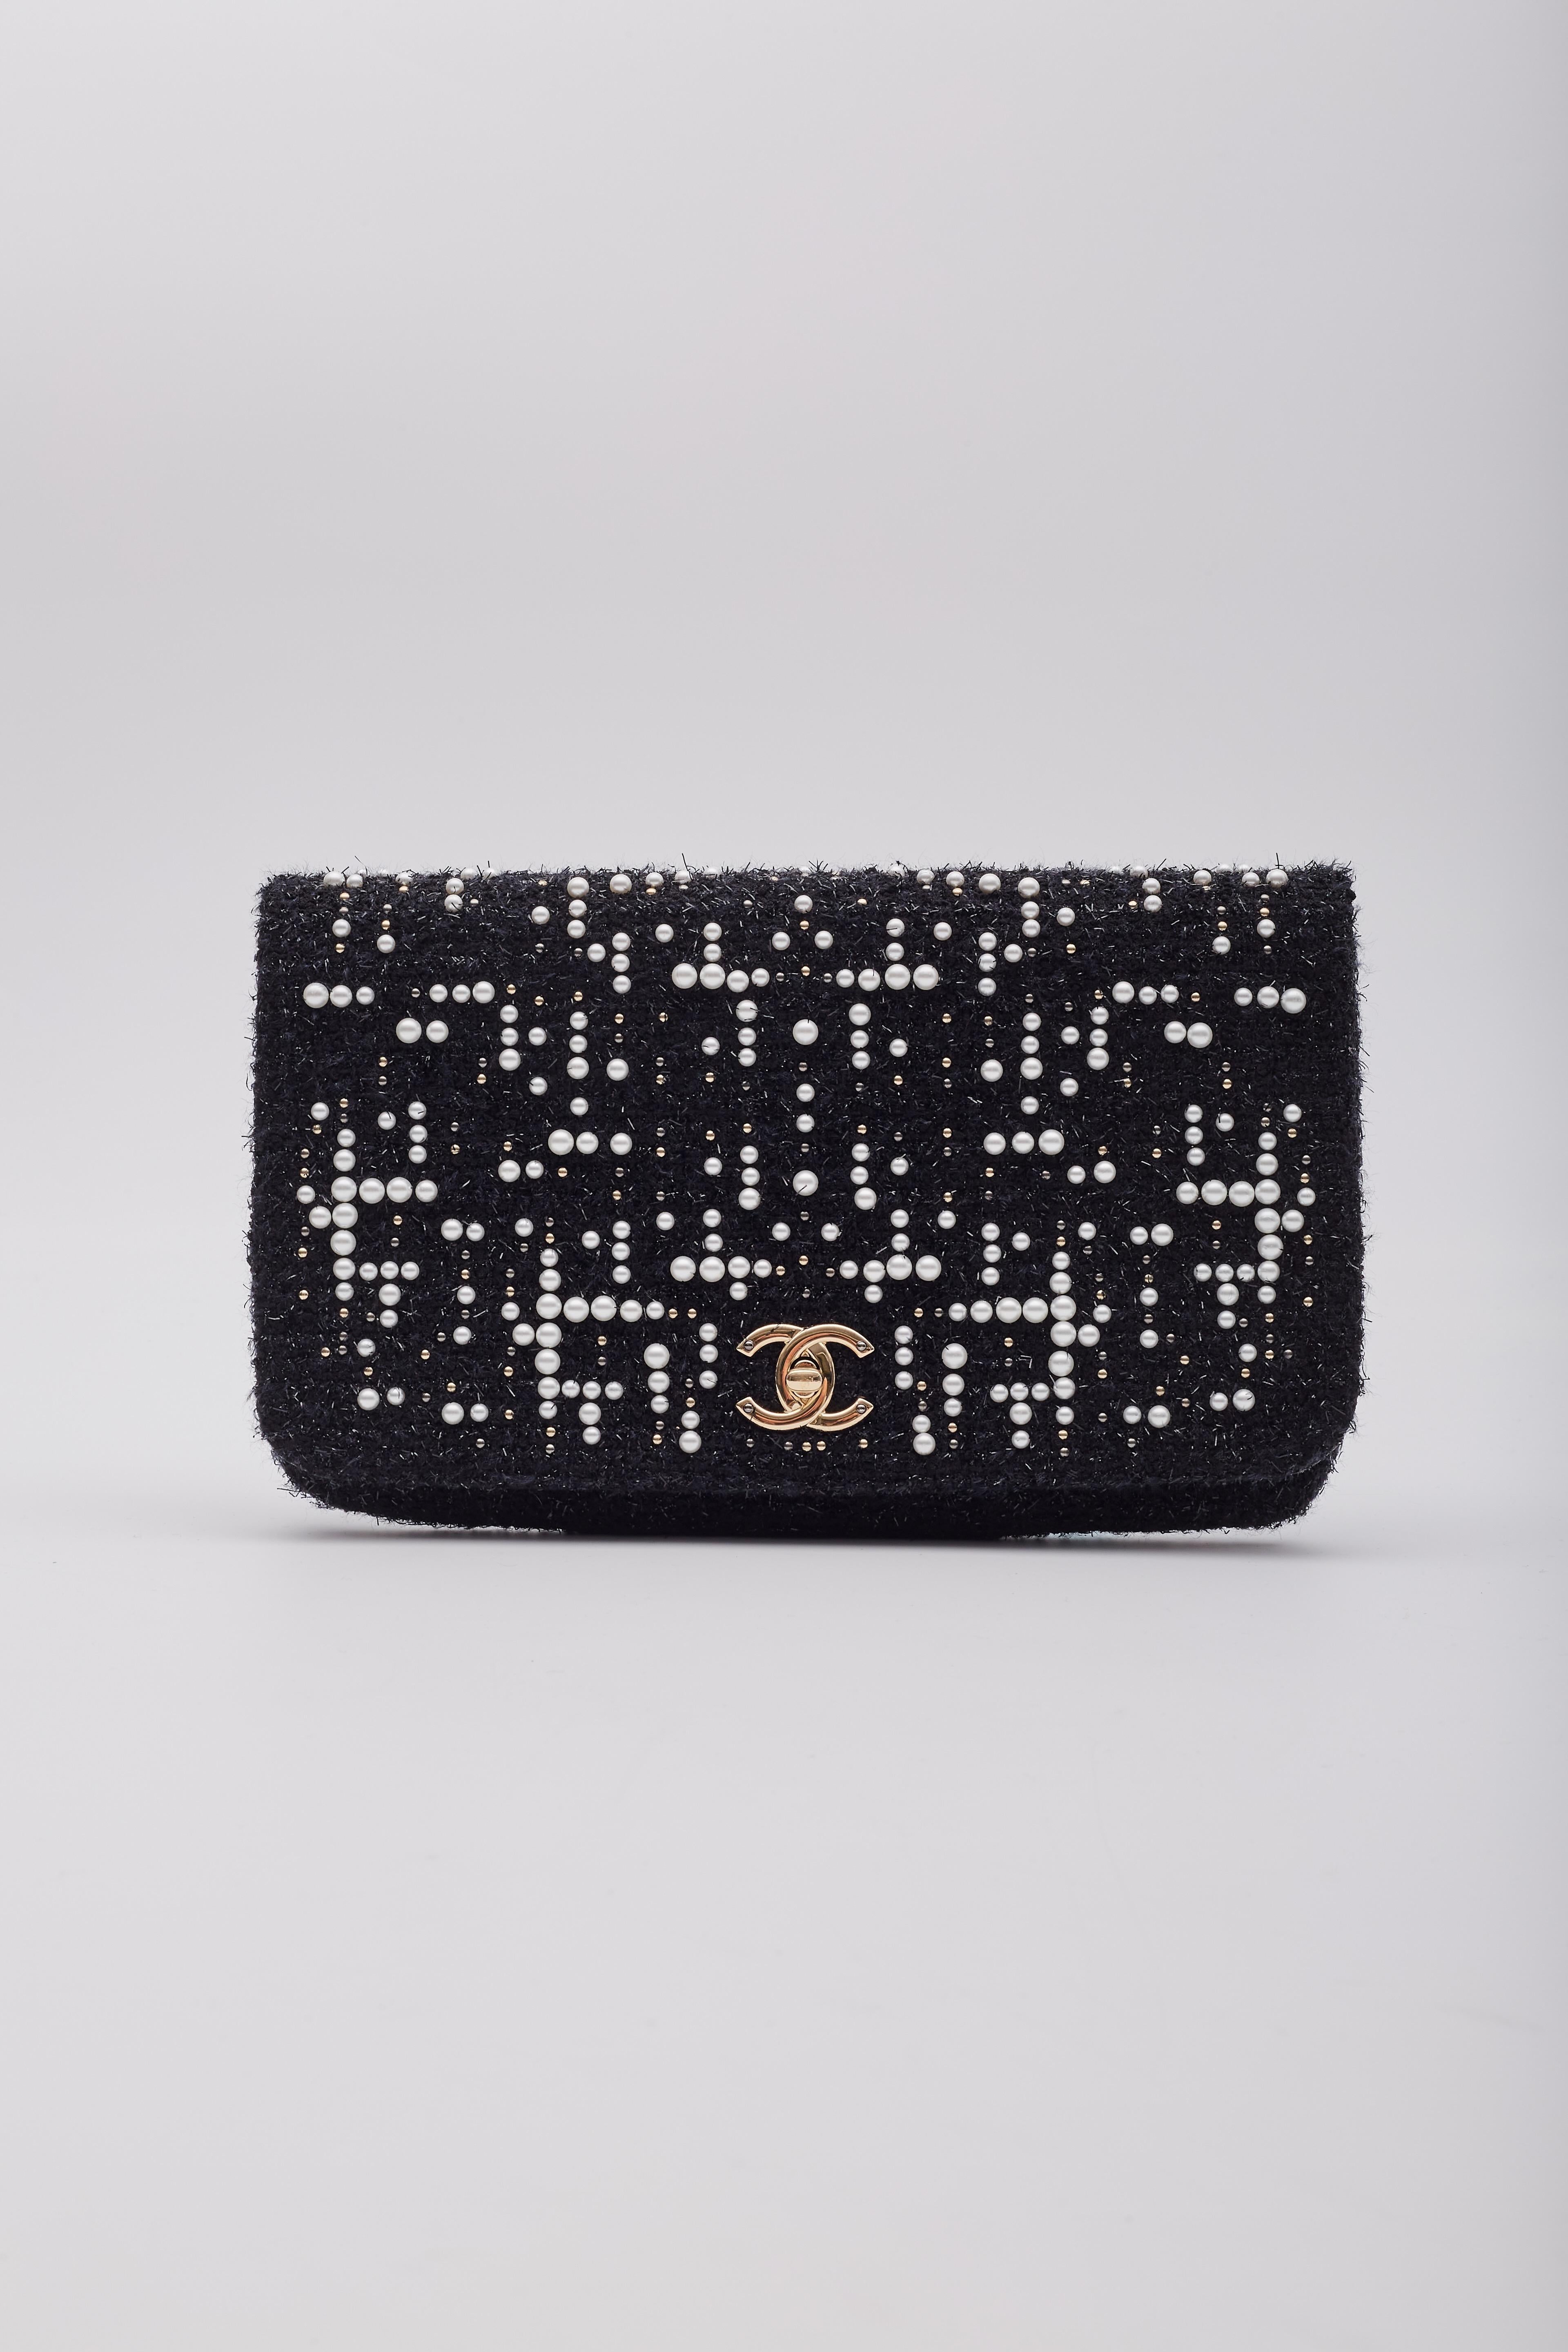 Chanel Paris Cosmopolite Pearl Fantasy Tweed Flap Clutch Bag For Sale 2